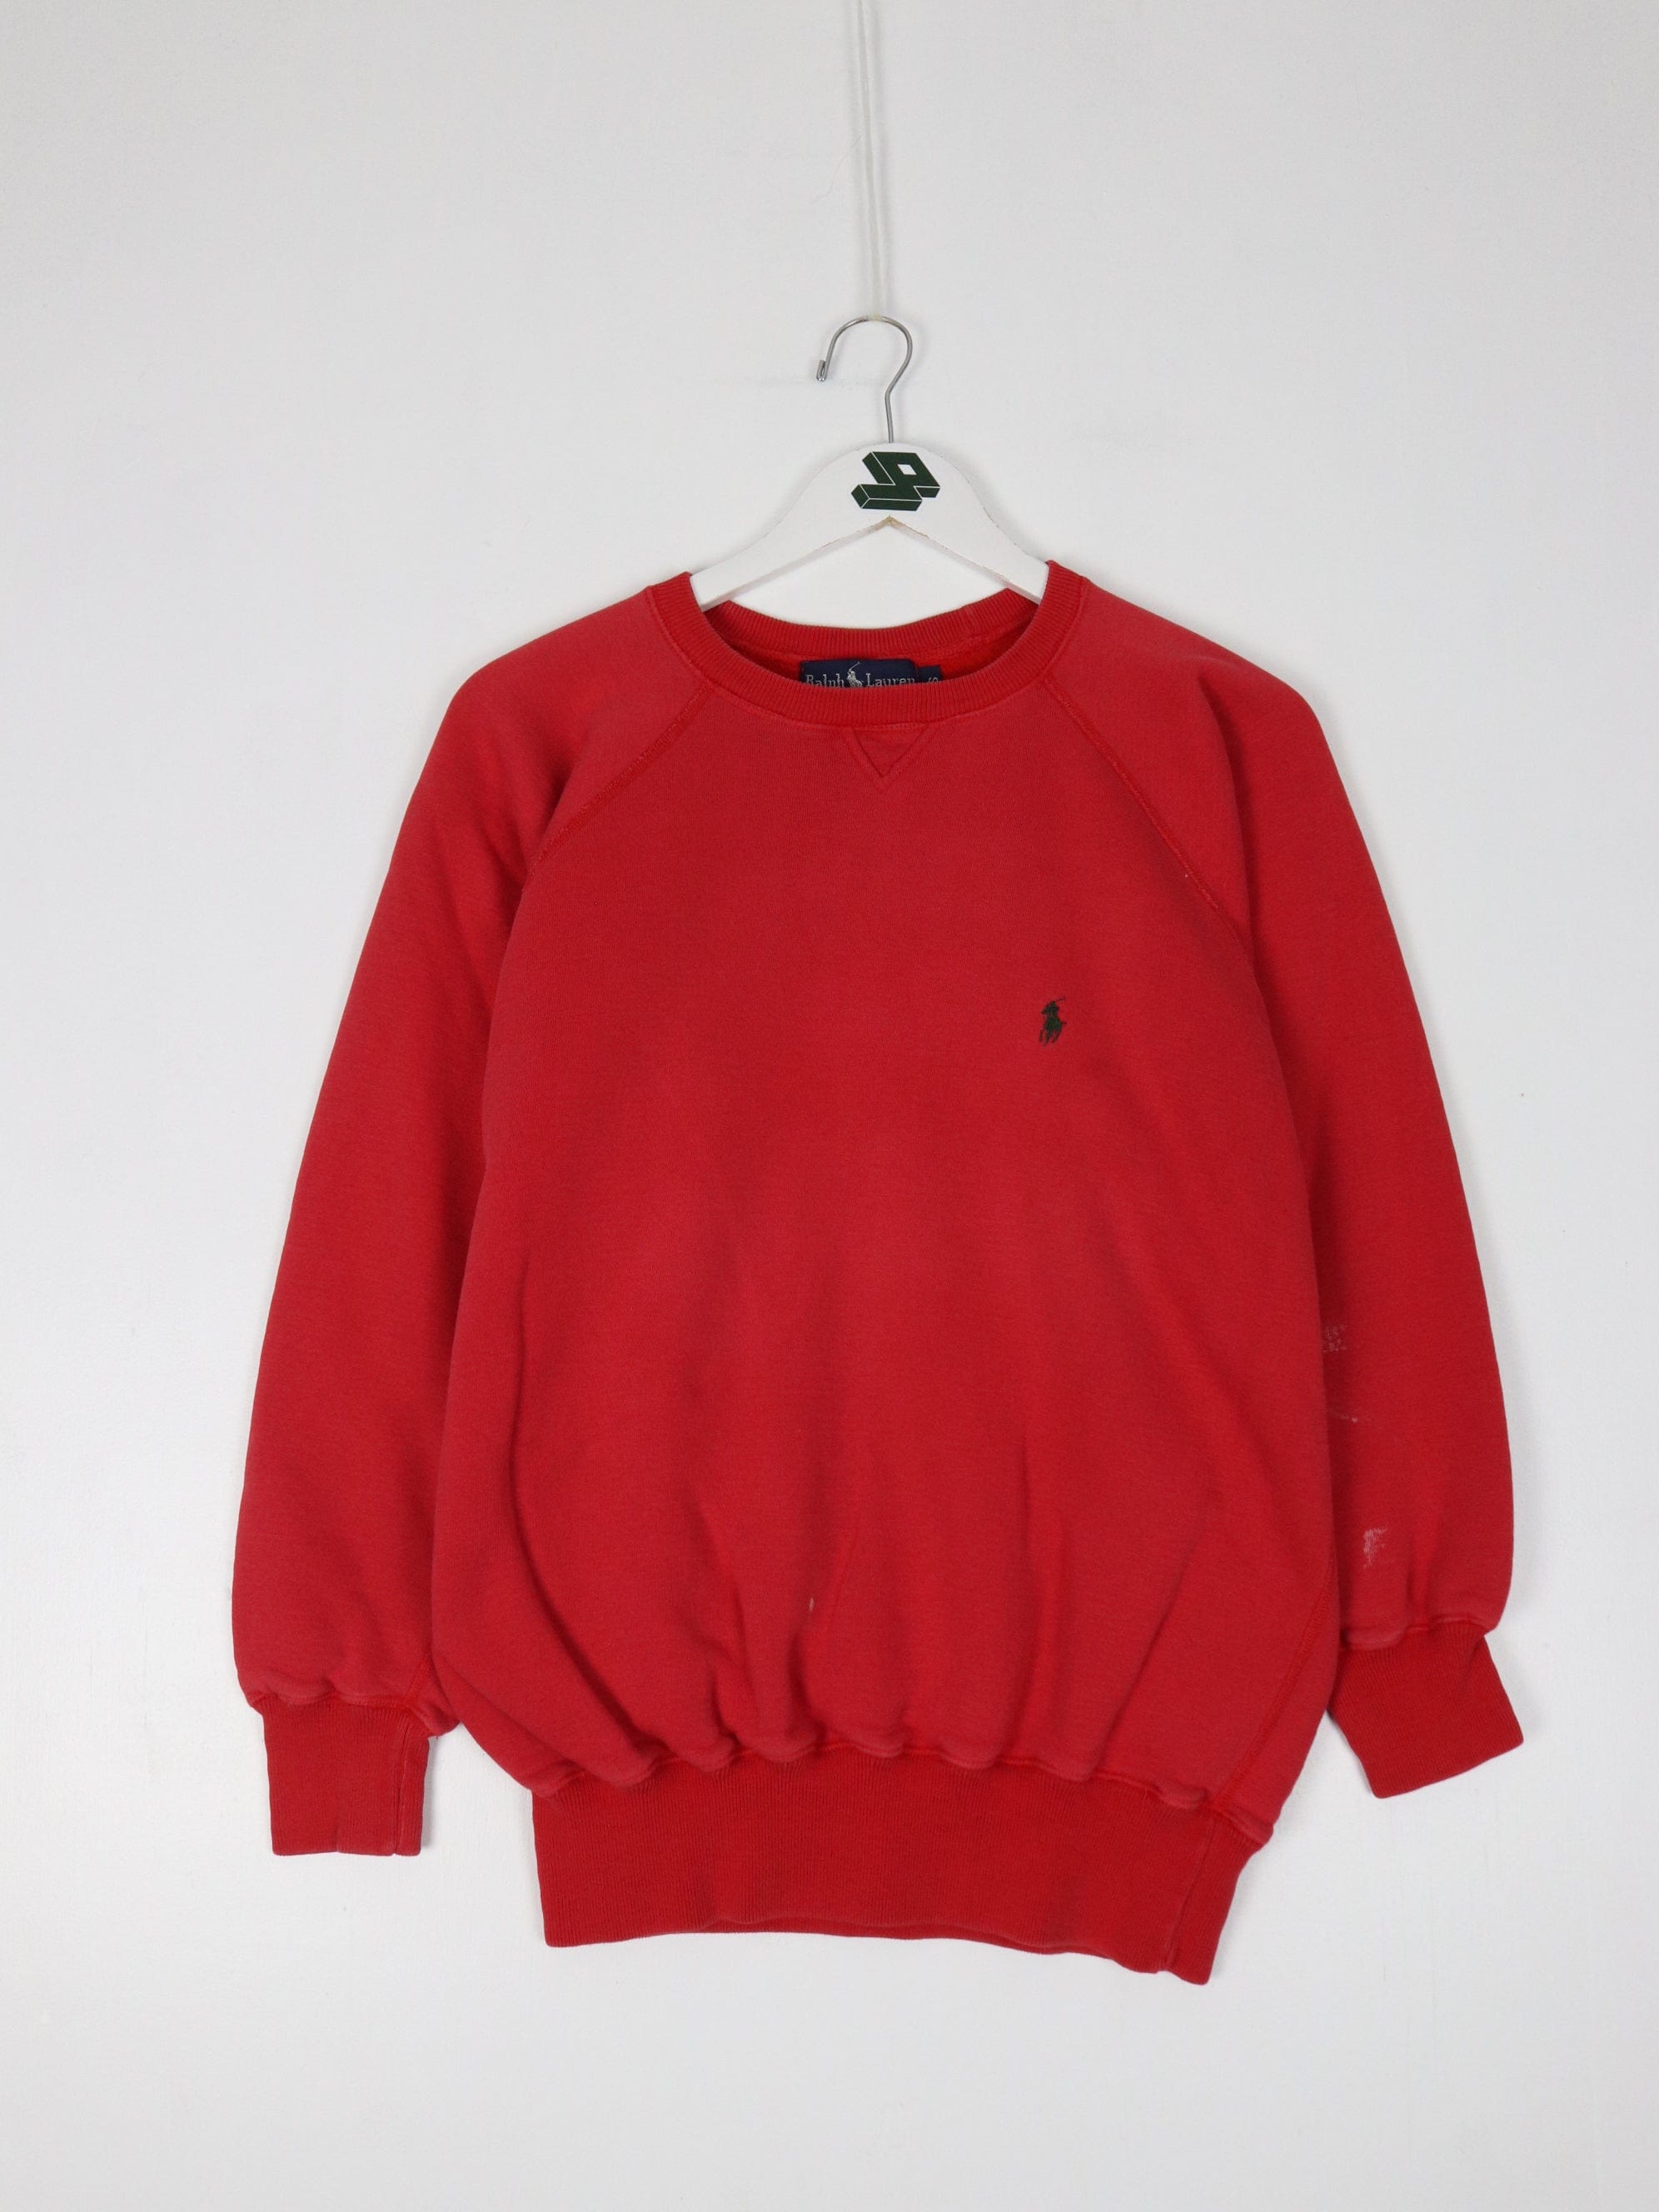 Vintage Polo Ralph Lauren Sweatshirt Mens Small Red Pony Sweater